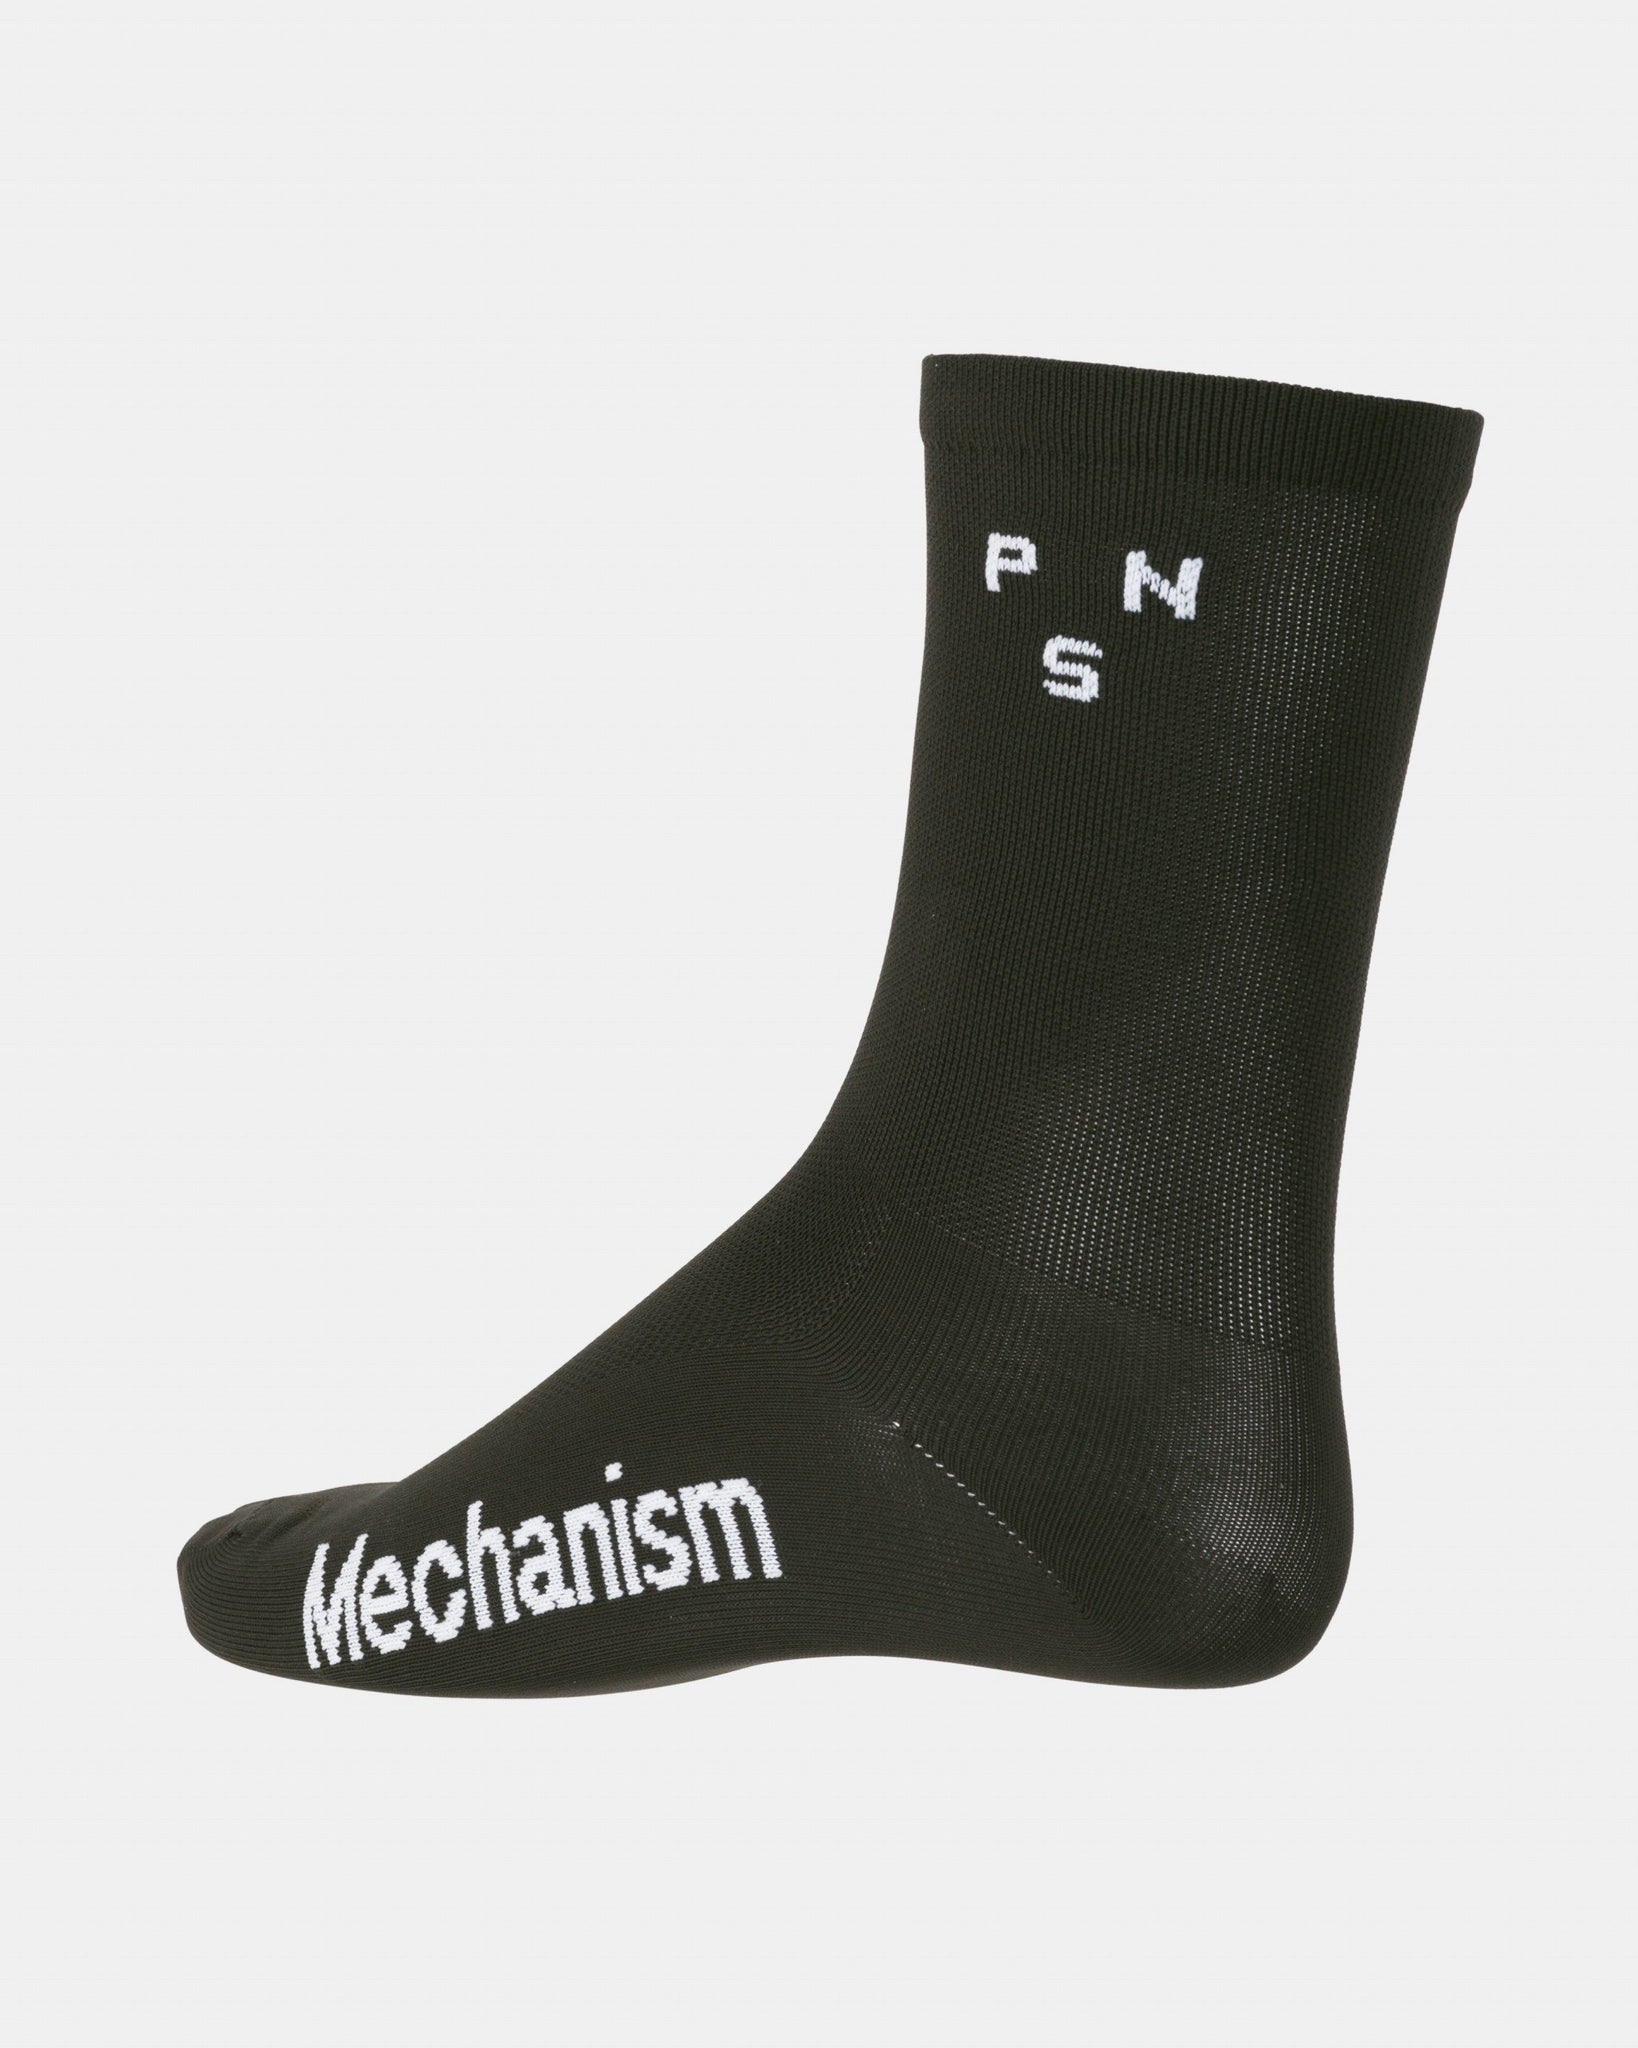 Mechanism Socks